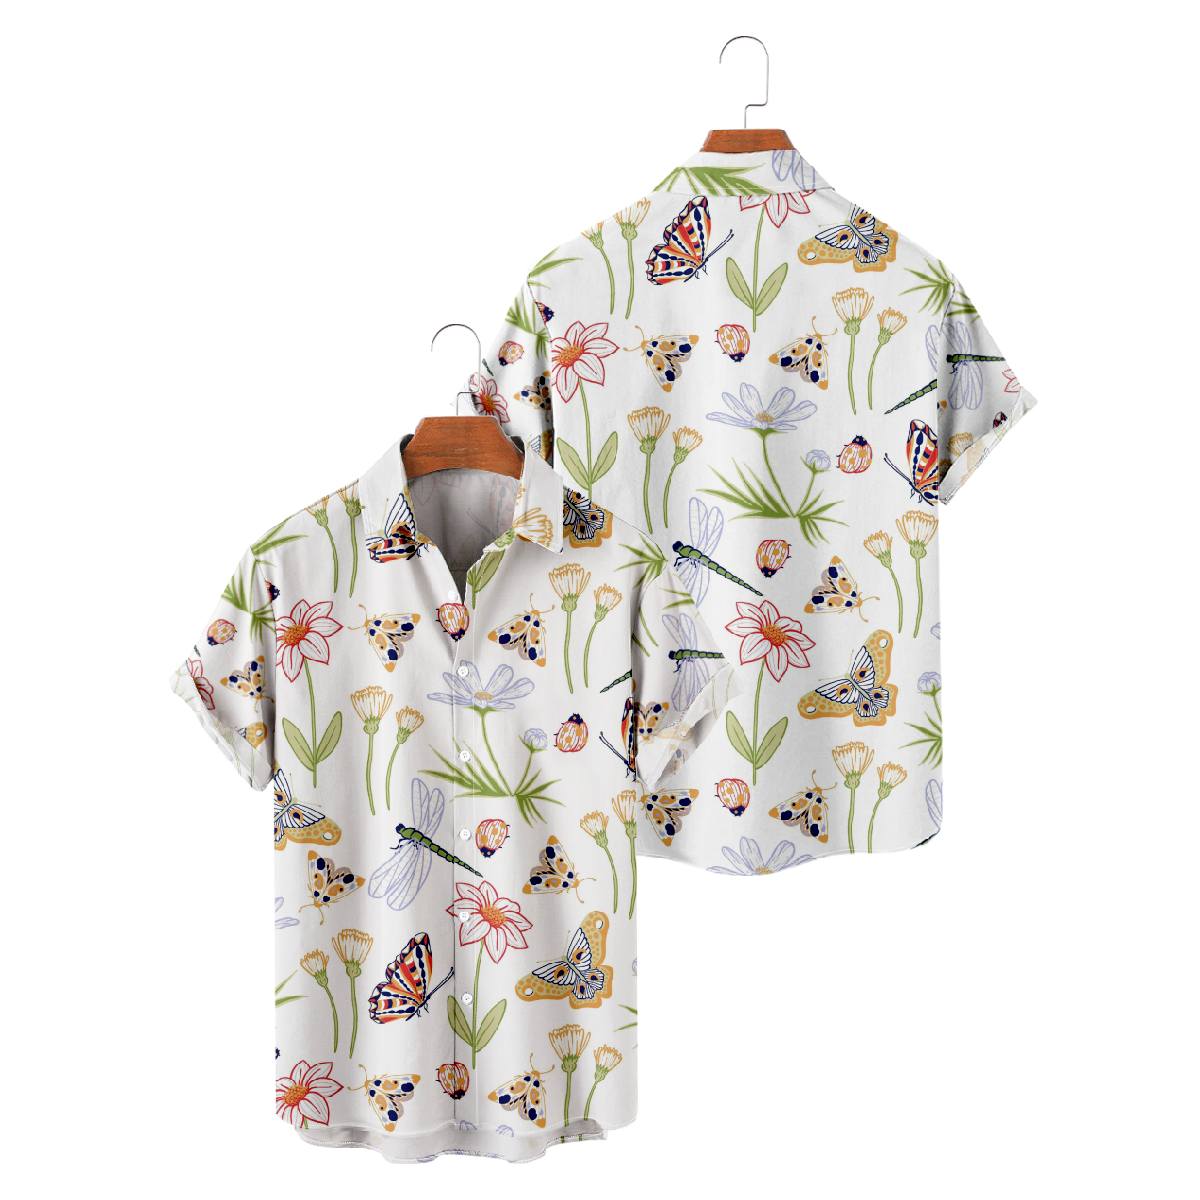 Dragonfly Summer Shirt Mens Casual Short Sleeve Shirt Button Up uhoodie Shirt